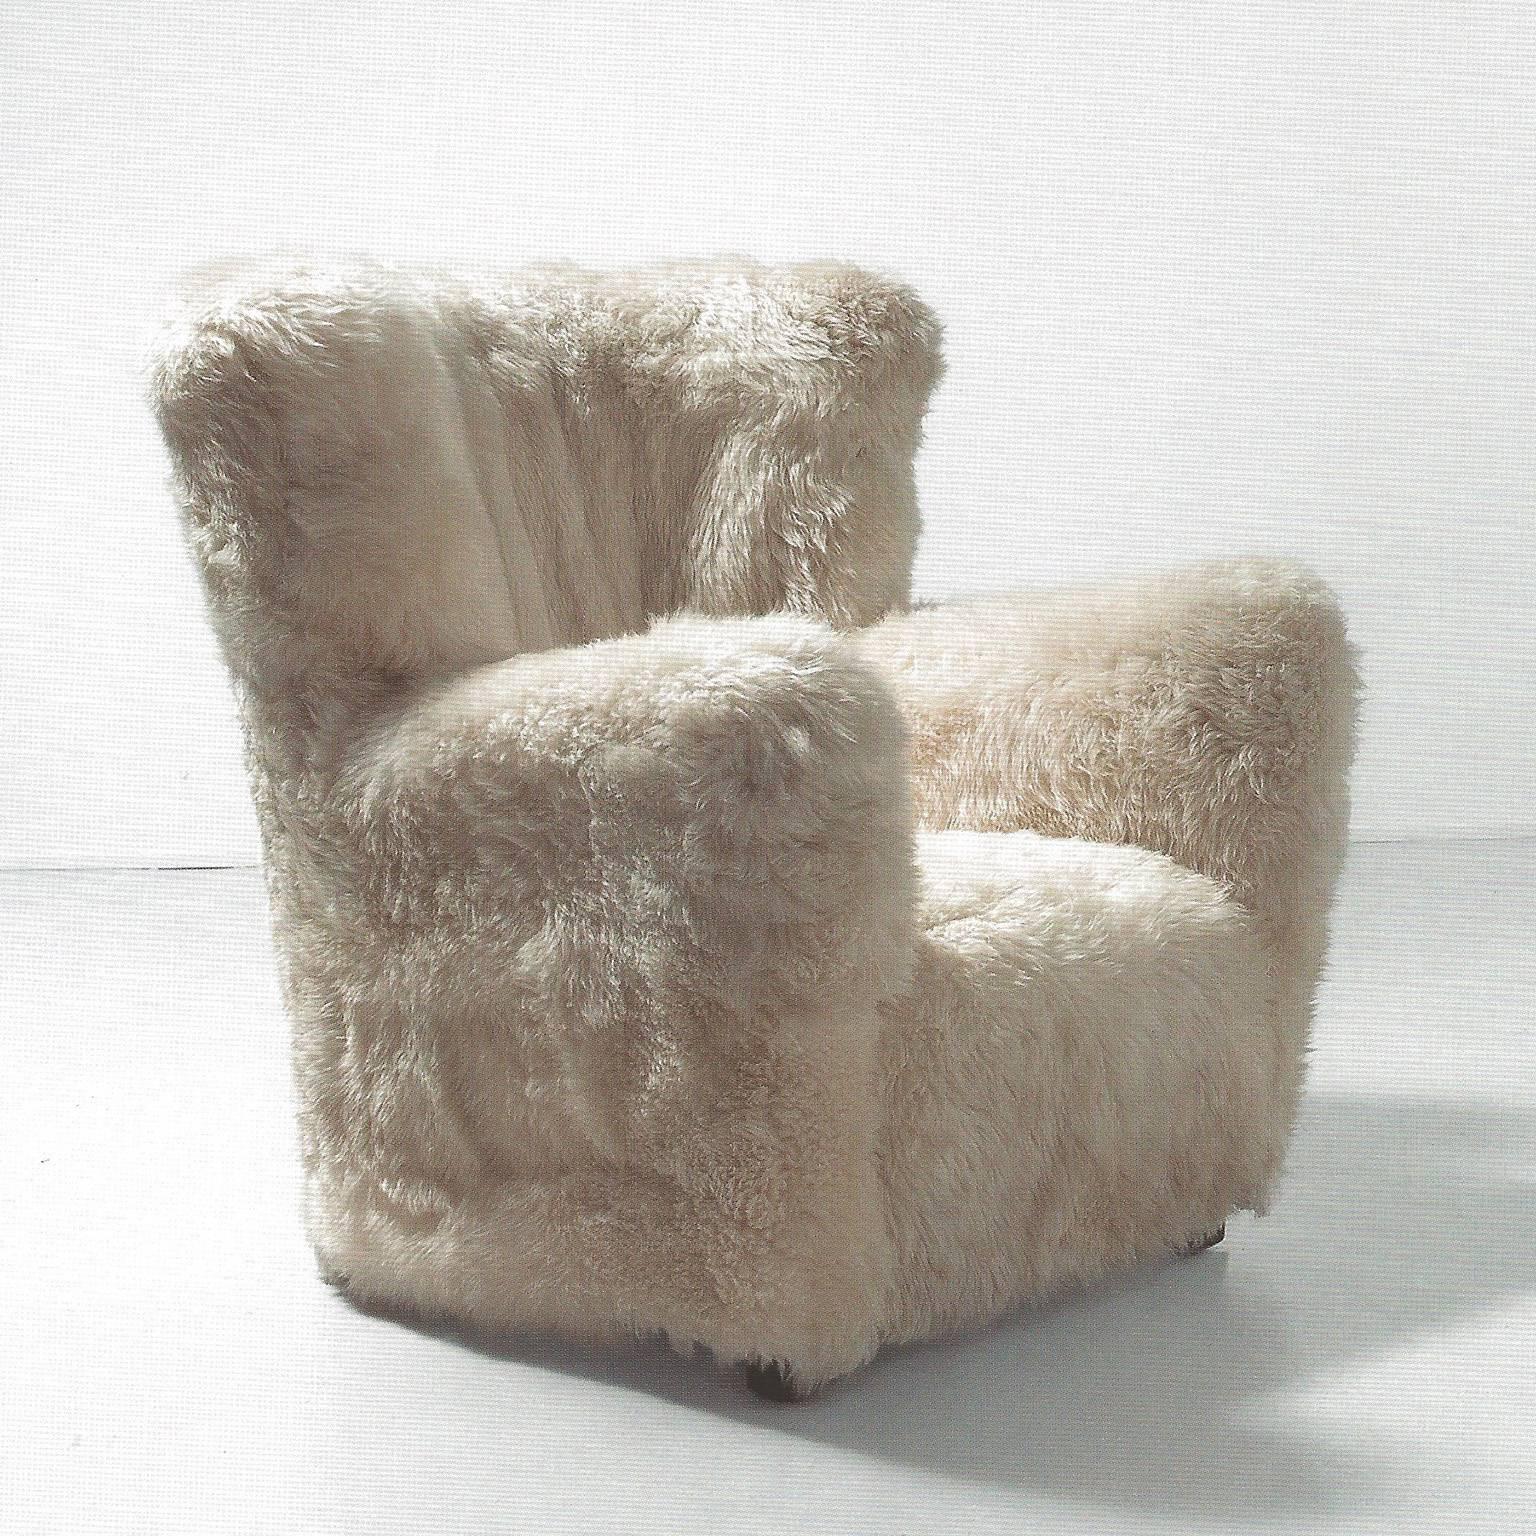 Sheepskin armchair, model 1519 by Fritz Hansen.
Wood legs, original sheepskin.
Edition Fritz Hansen.